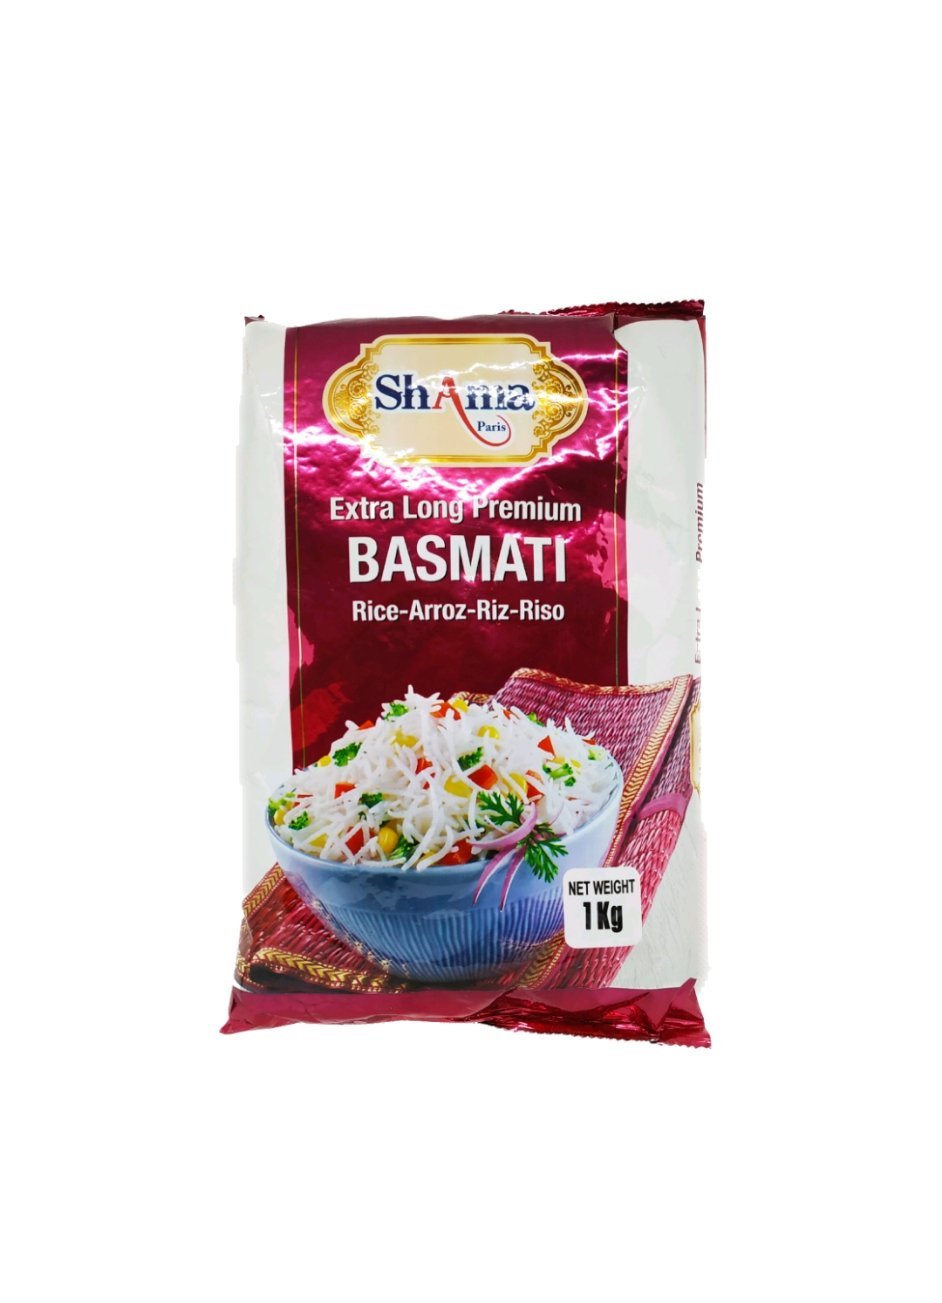 Produits orientaux en ligne : Shama - Extra long premium basmati rice